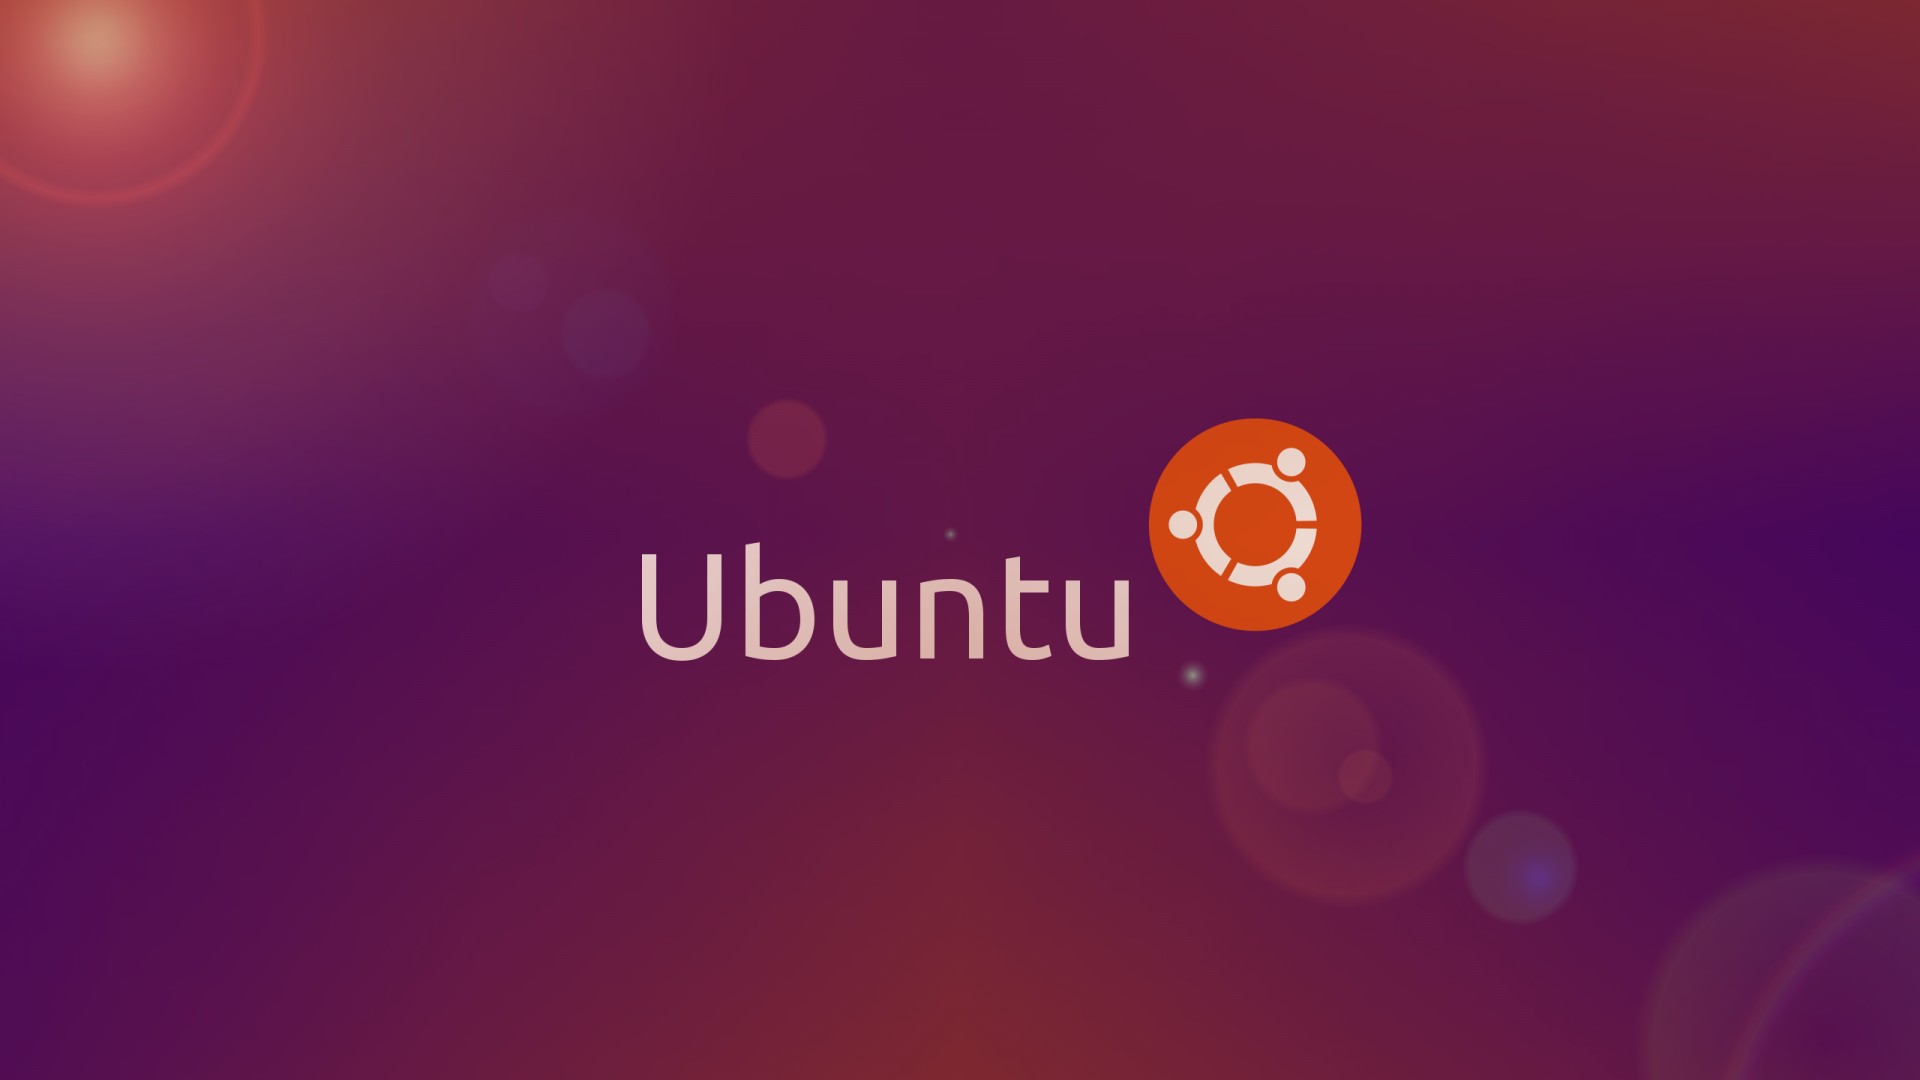 Ubuntu Wallpaper High Definition